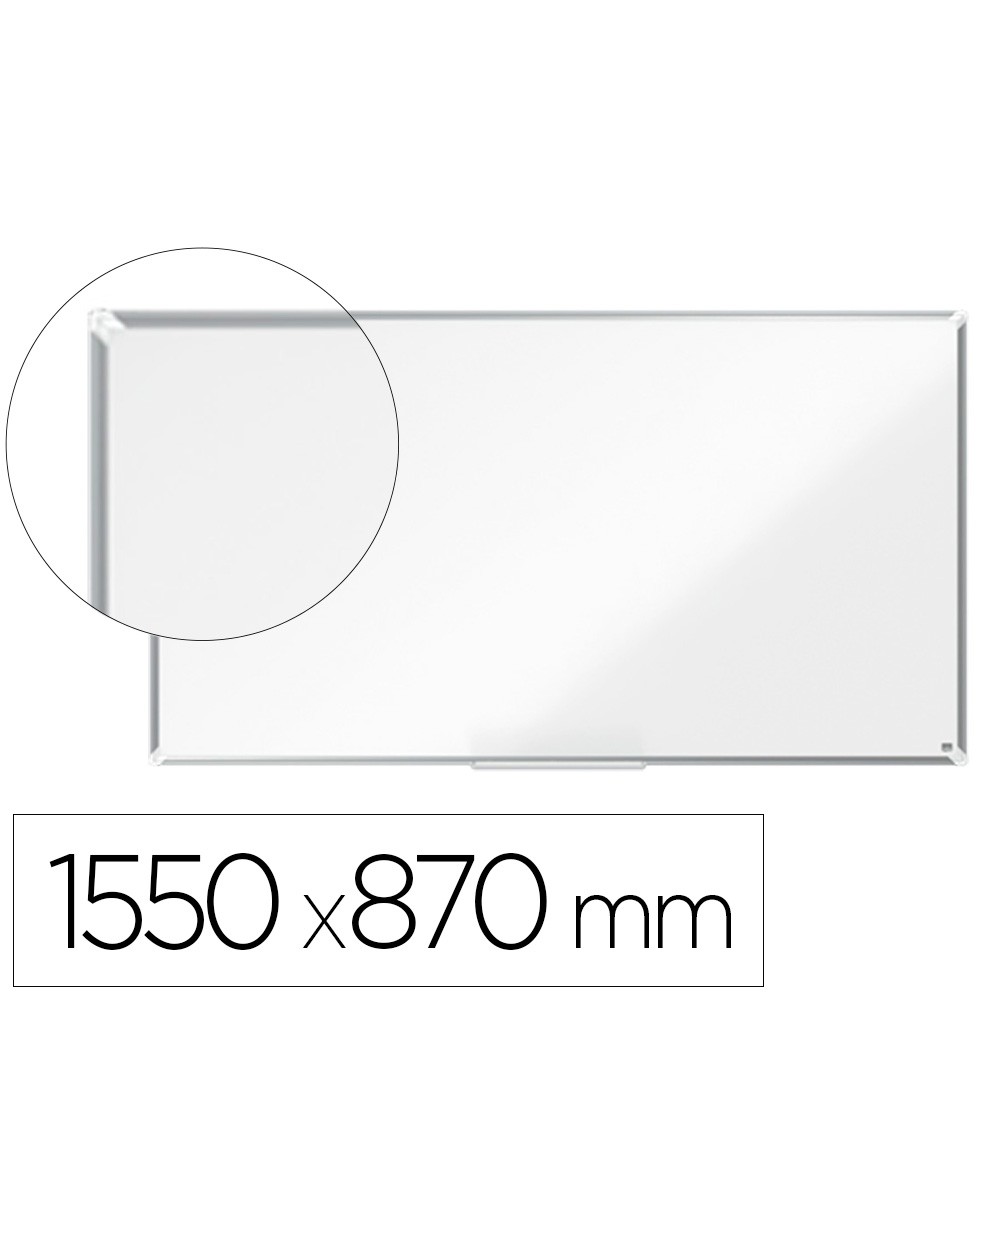 Pizarra blanca nobo premium plus acero vitrificado formato panoramico 70 magnetica 1550x870 mm